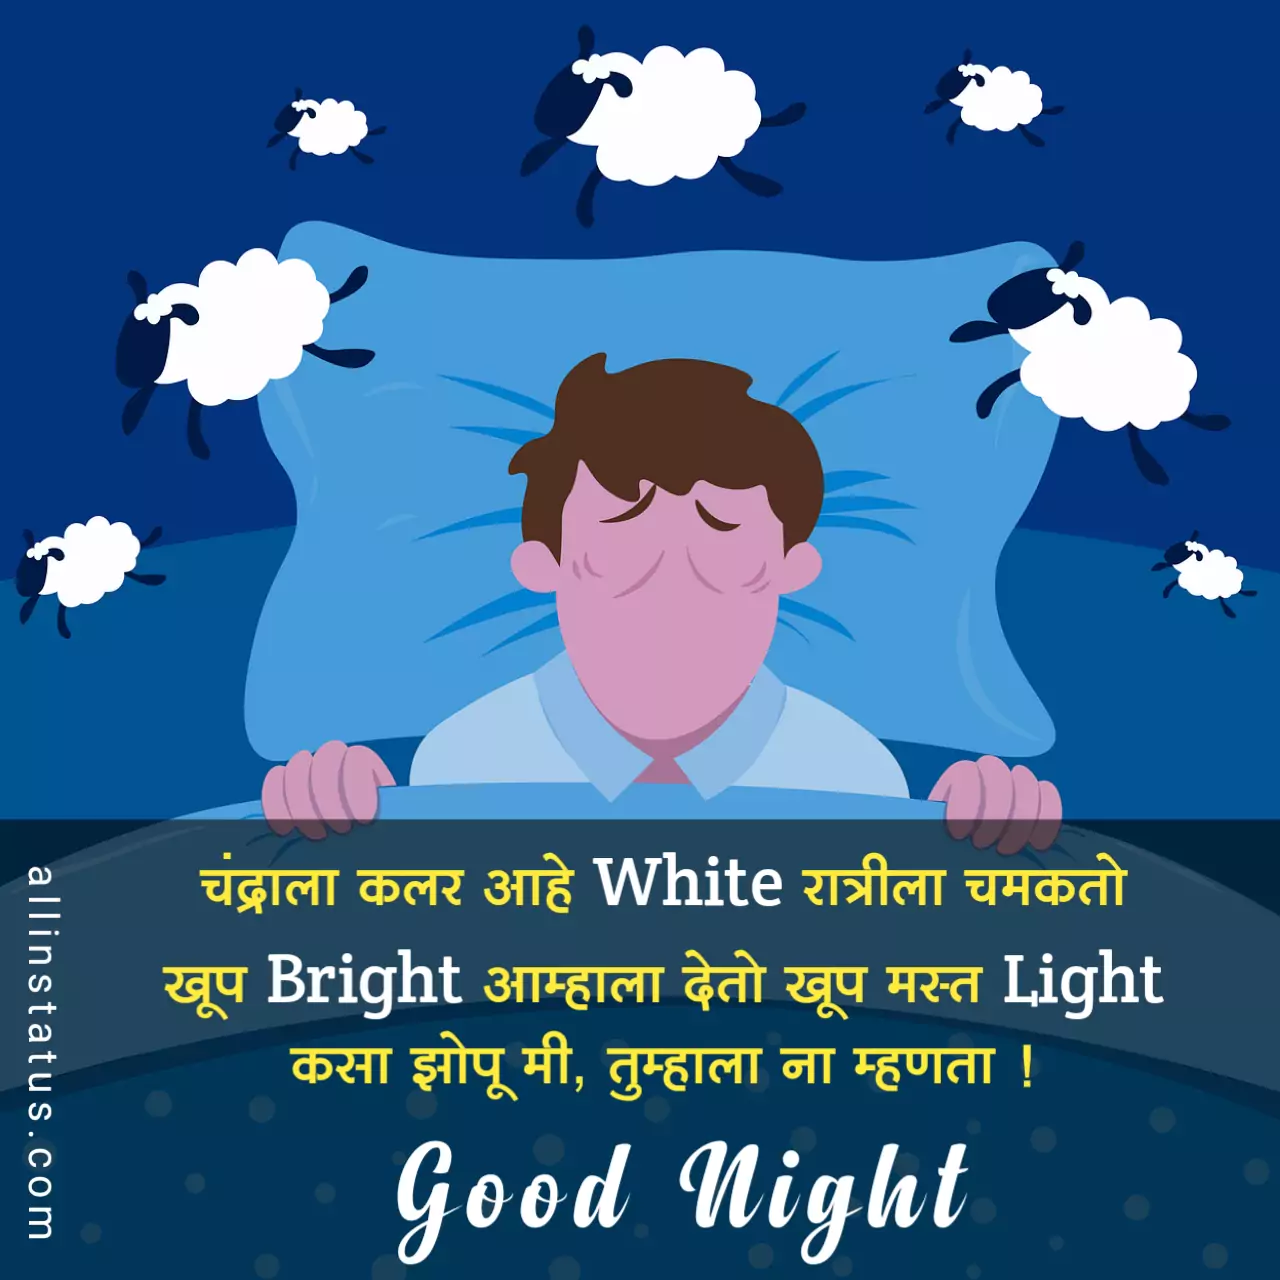 Good night message in marathi